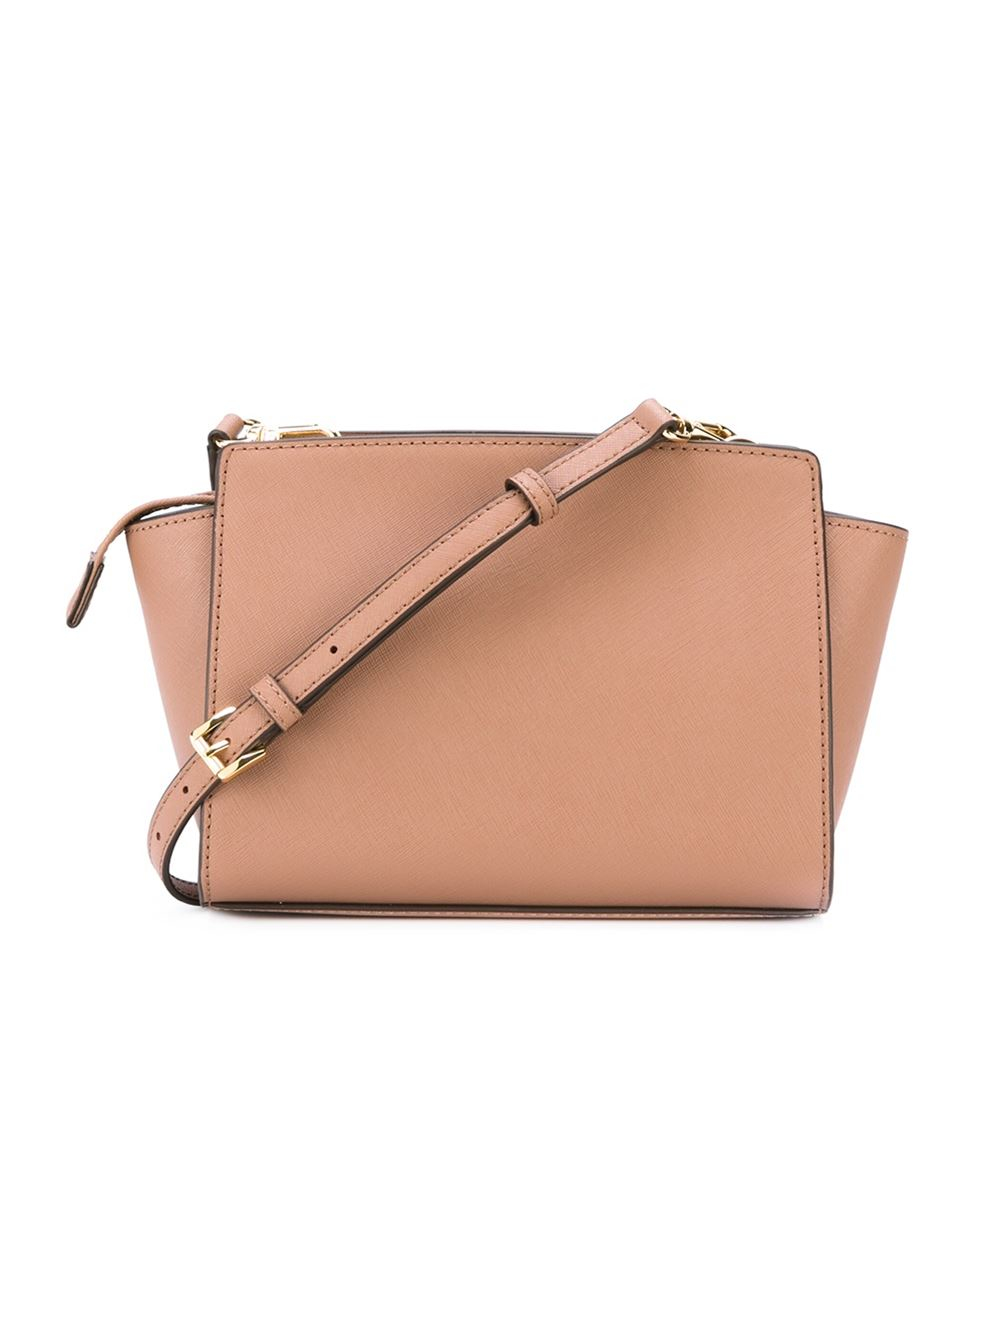 Michael Kors Daniela Large Saffiano Leather Crossbody Bag - Soft Pink  32S0GDDC3L-187 - AllGlitters